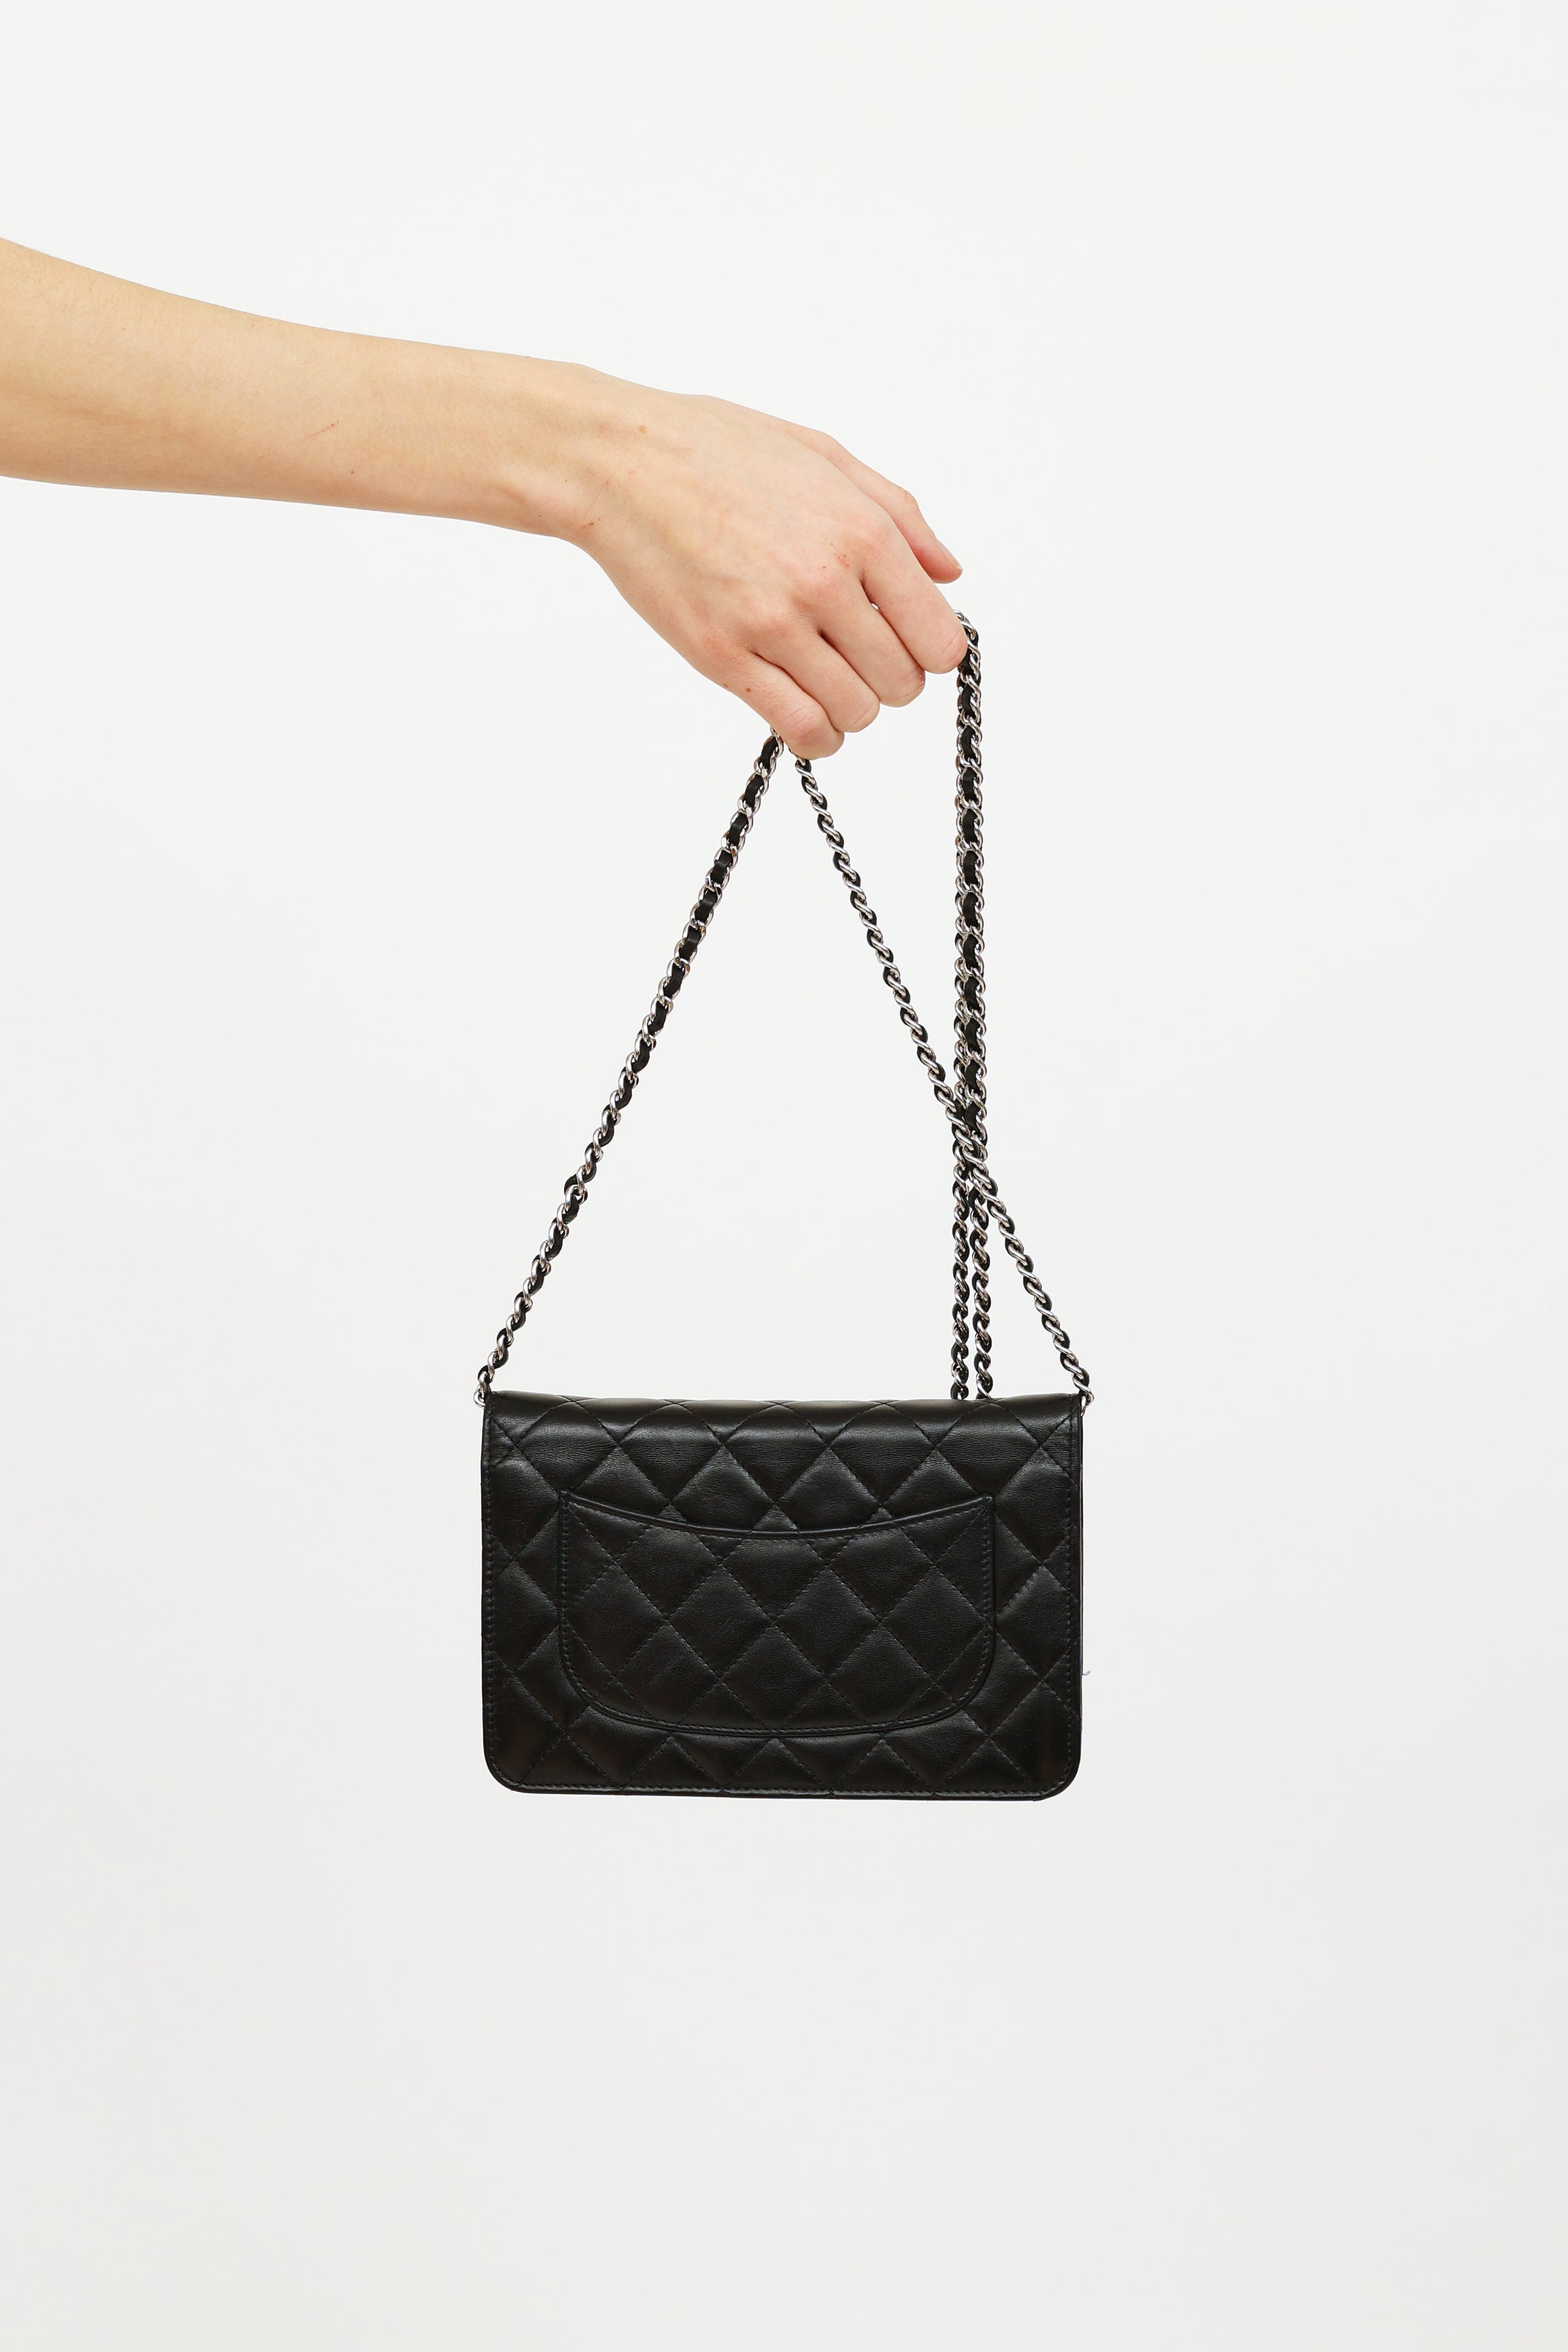 Chanel Chain Wallet(Black)